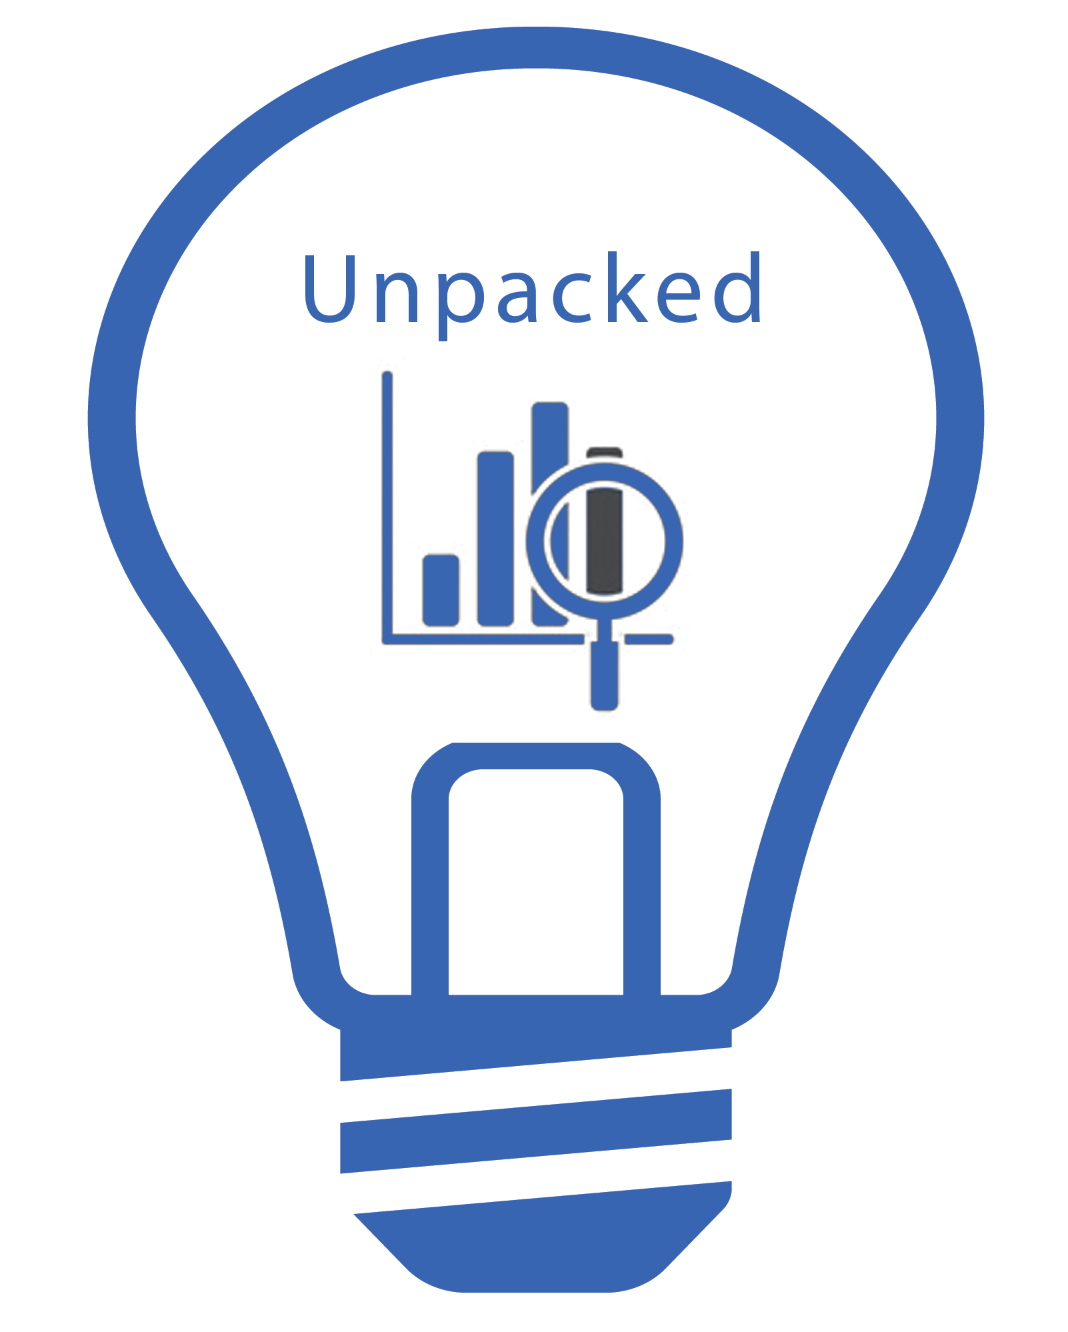 Unpacked: Amazon Echo, Siri, OK Google Frequency of Use